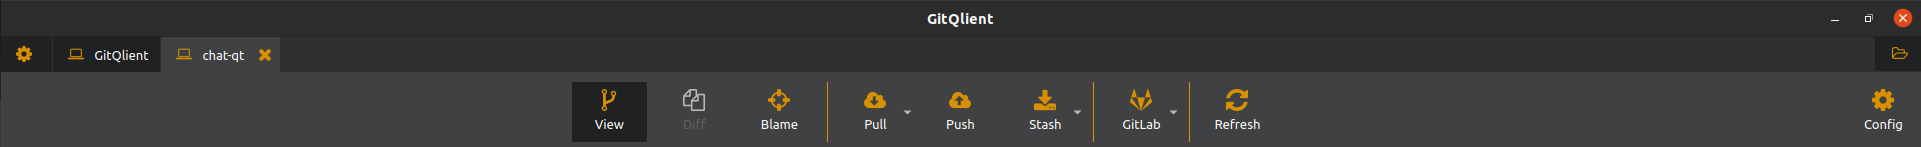 GitQlient - Quick access actions (GitLab)